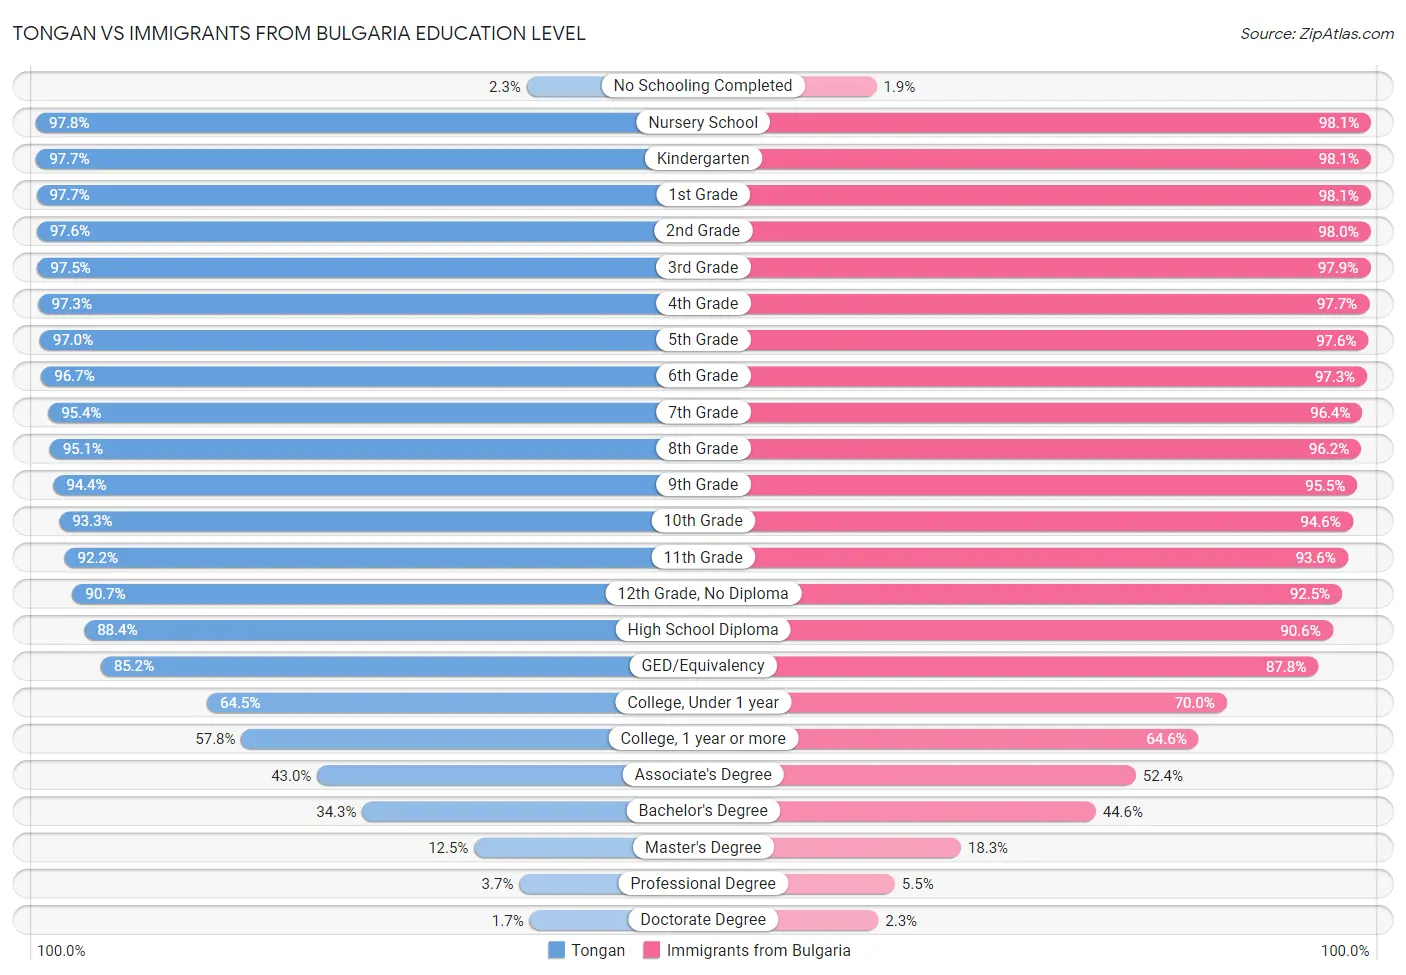 Tongan vs Immigrants from Bulgaria Education Level